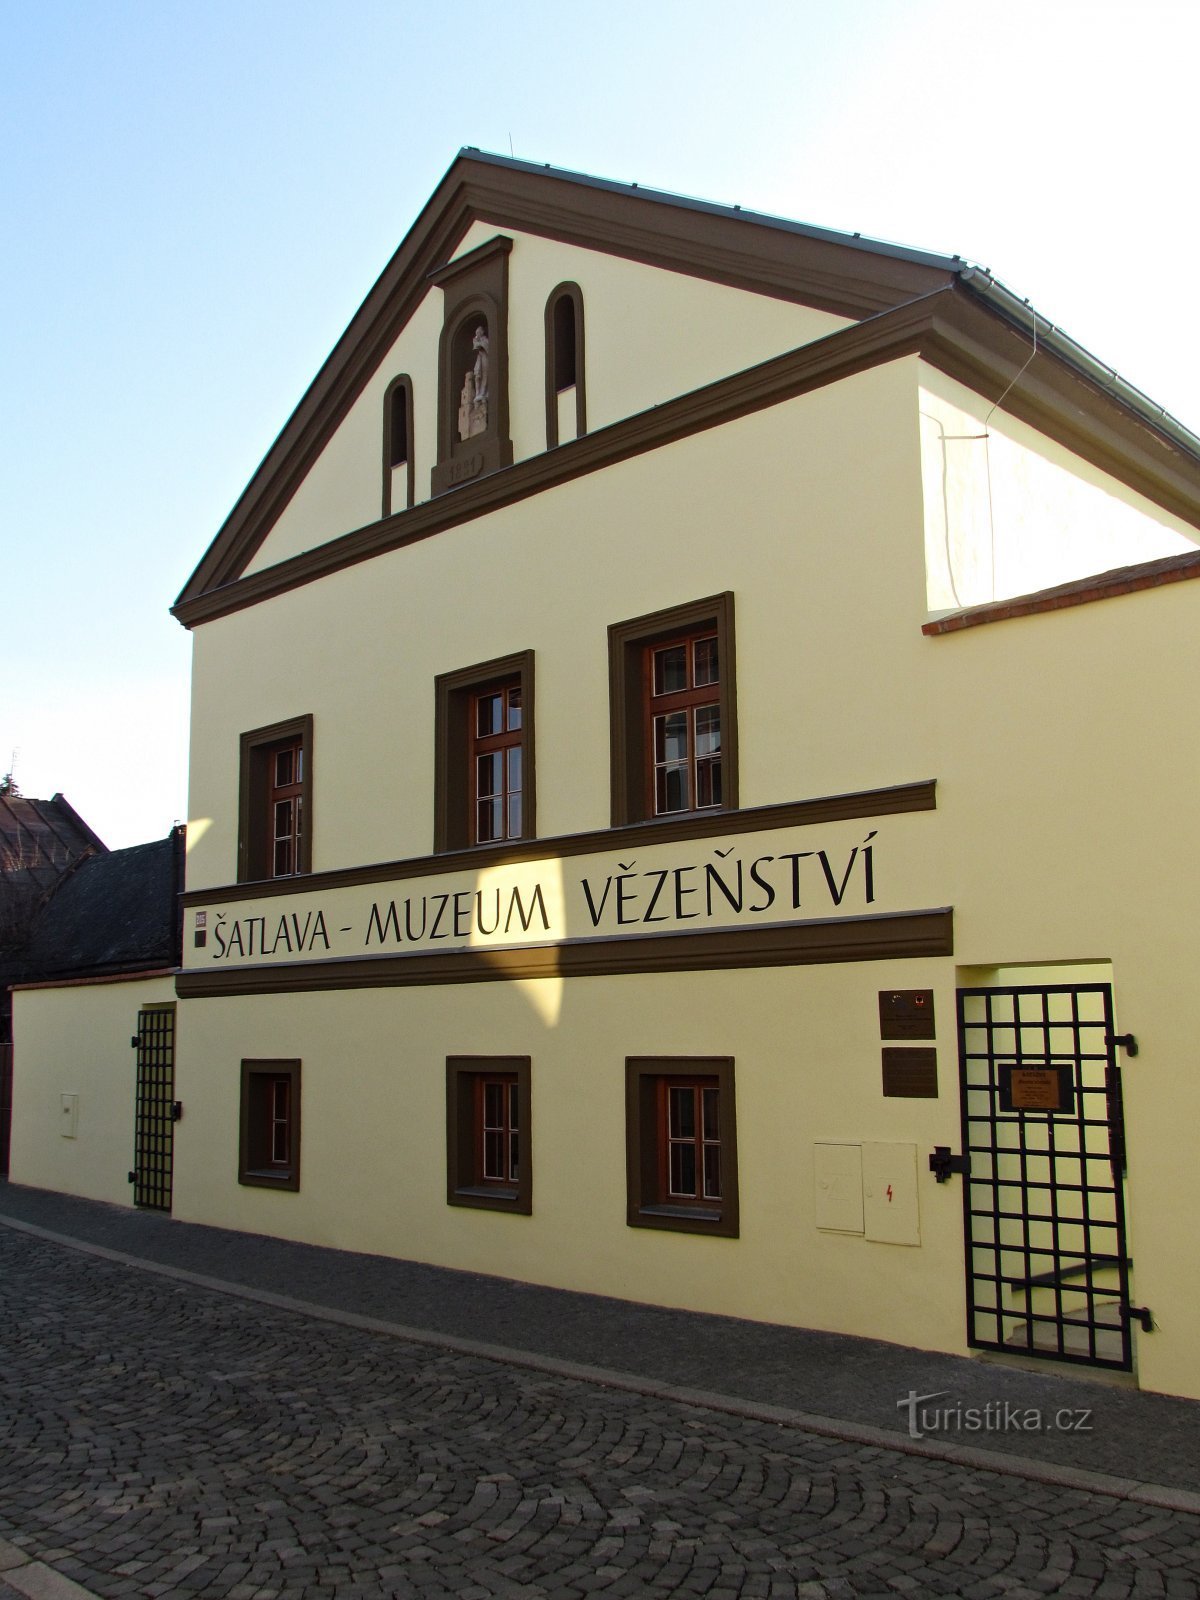 Uničovská museer - Šatlava, fængselsmuseum